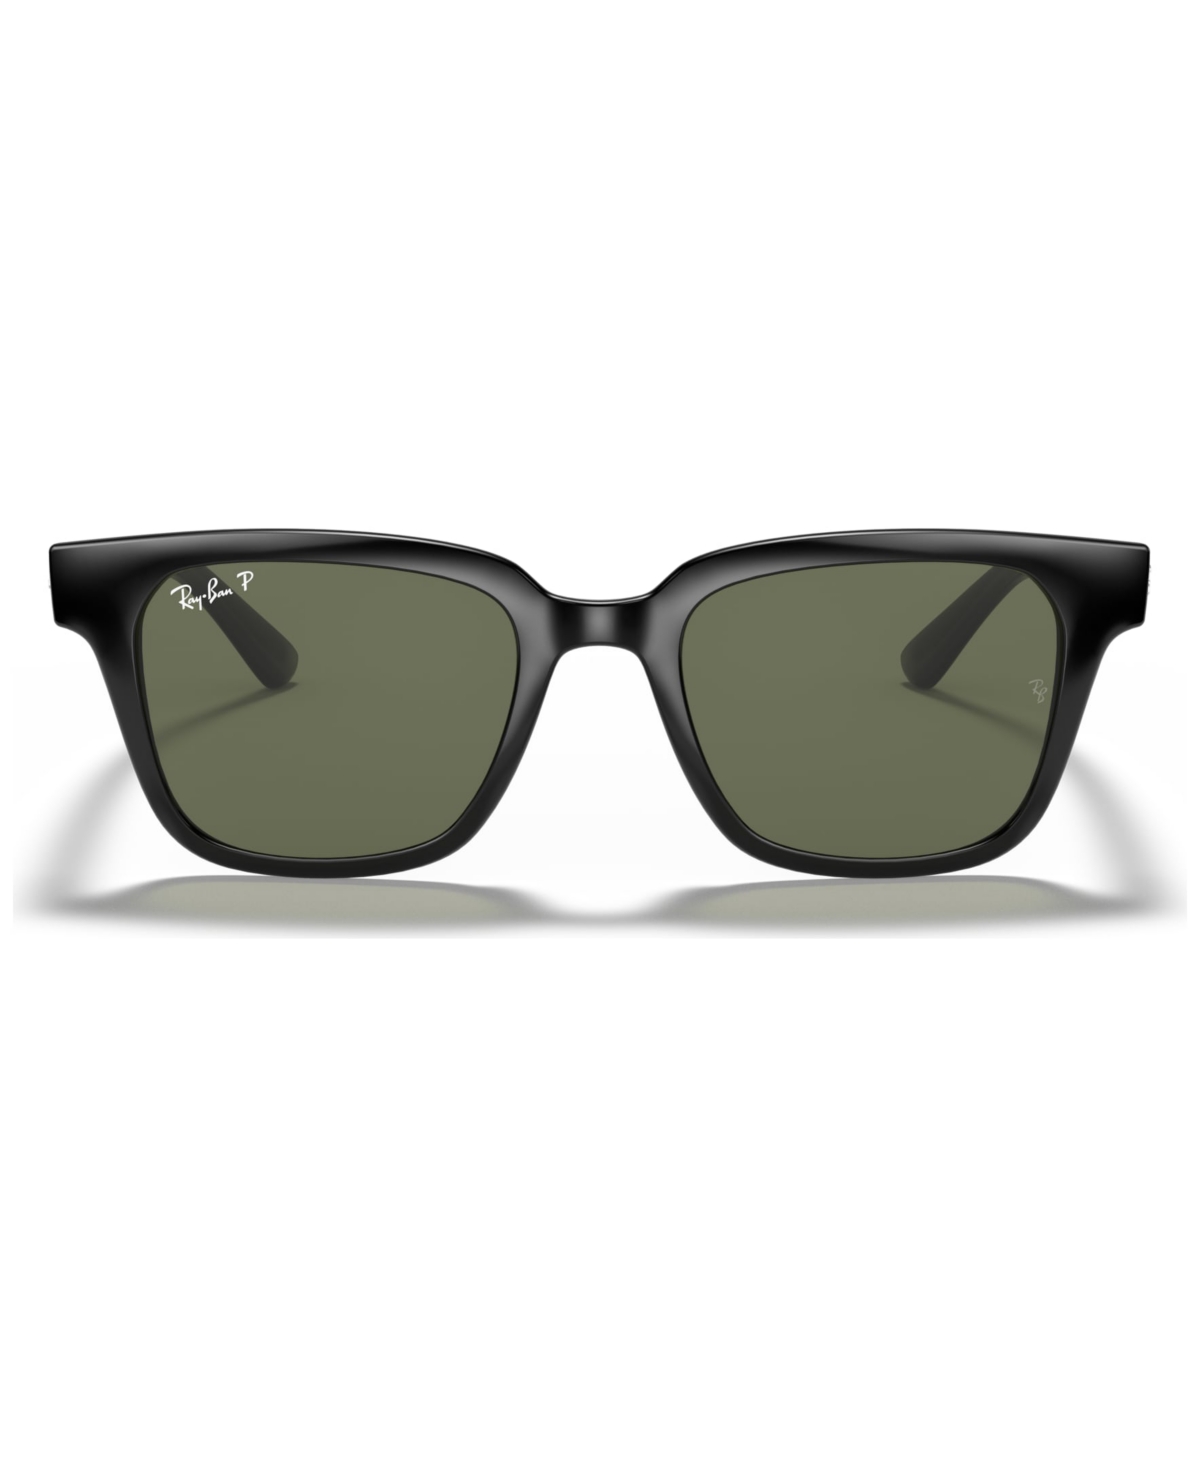 Ray Ban Polarized Sunglasses, Rb4323 51 In Black,dark Green Polar